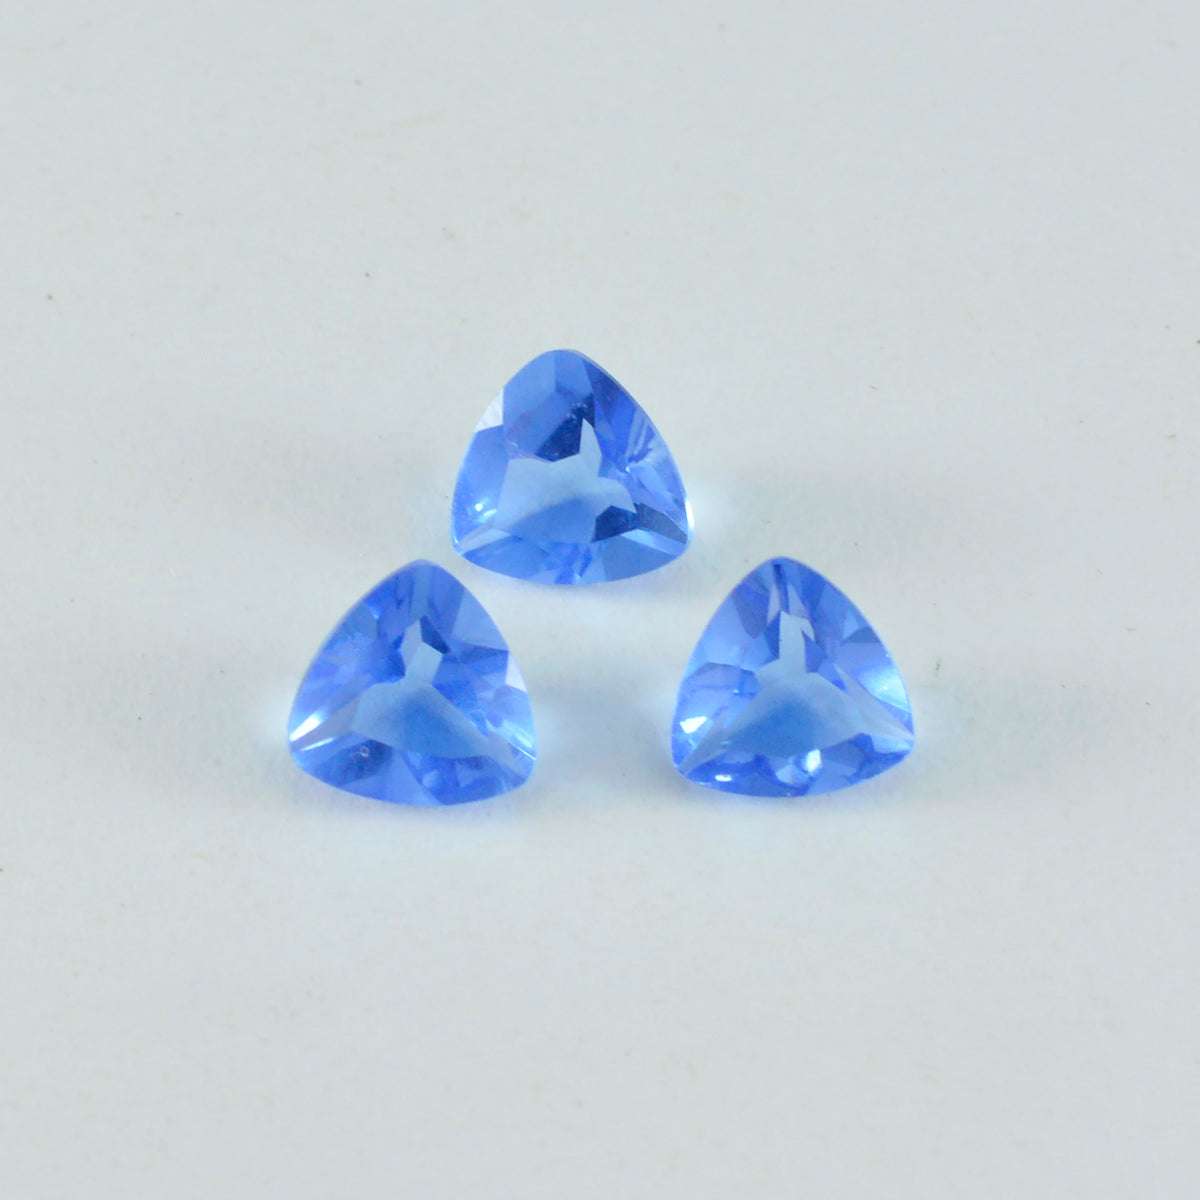 Riyogems 1 pieza zafiro azul CZ facetado 11x11 mm forma de billón piedra de calidad impresionante